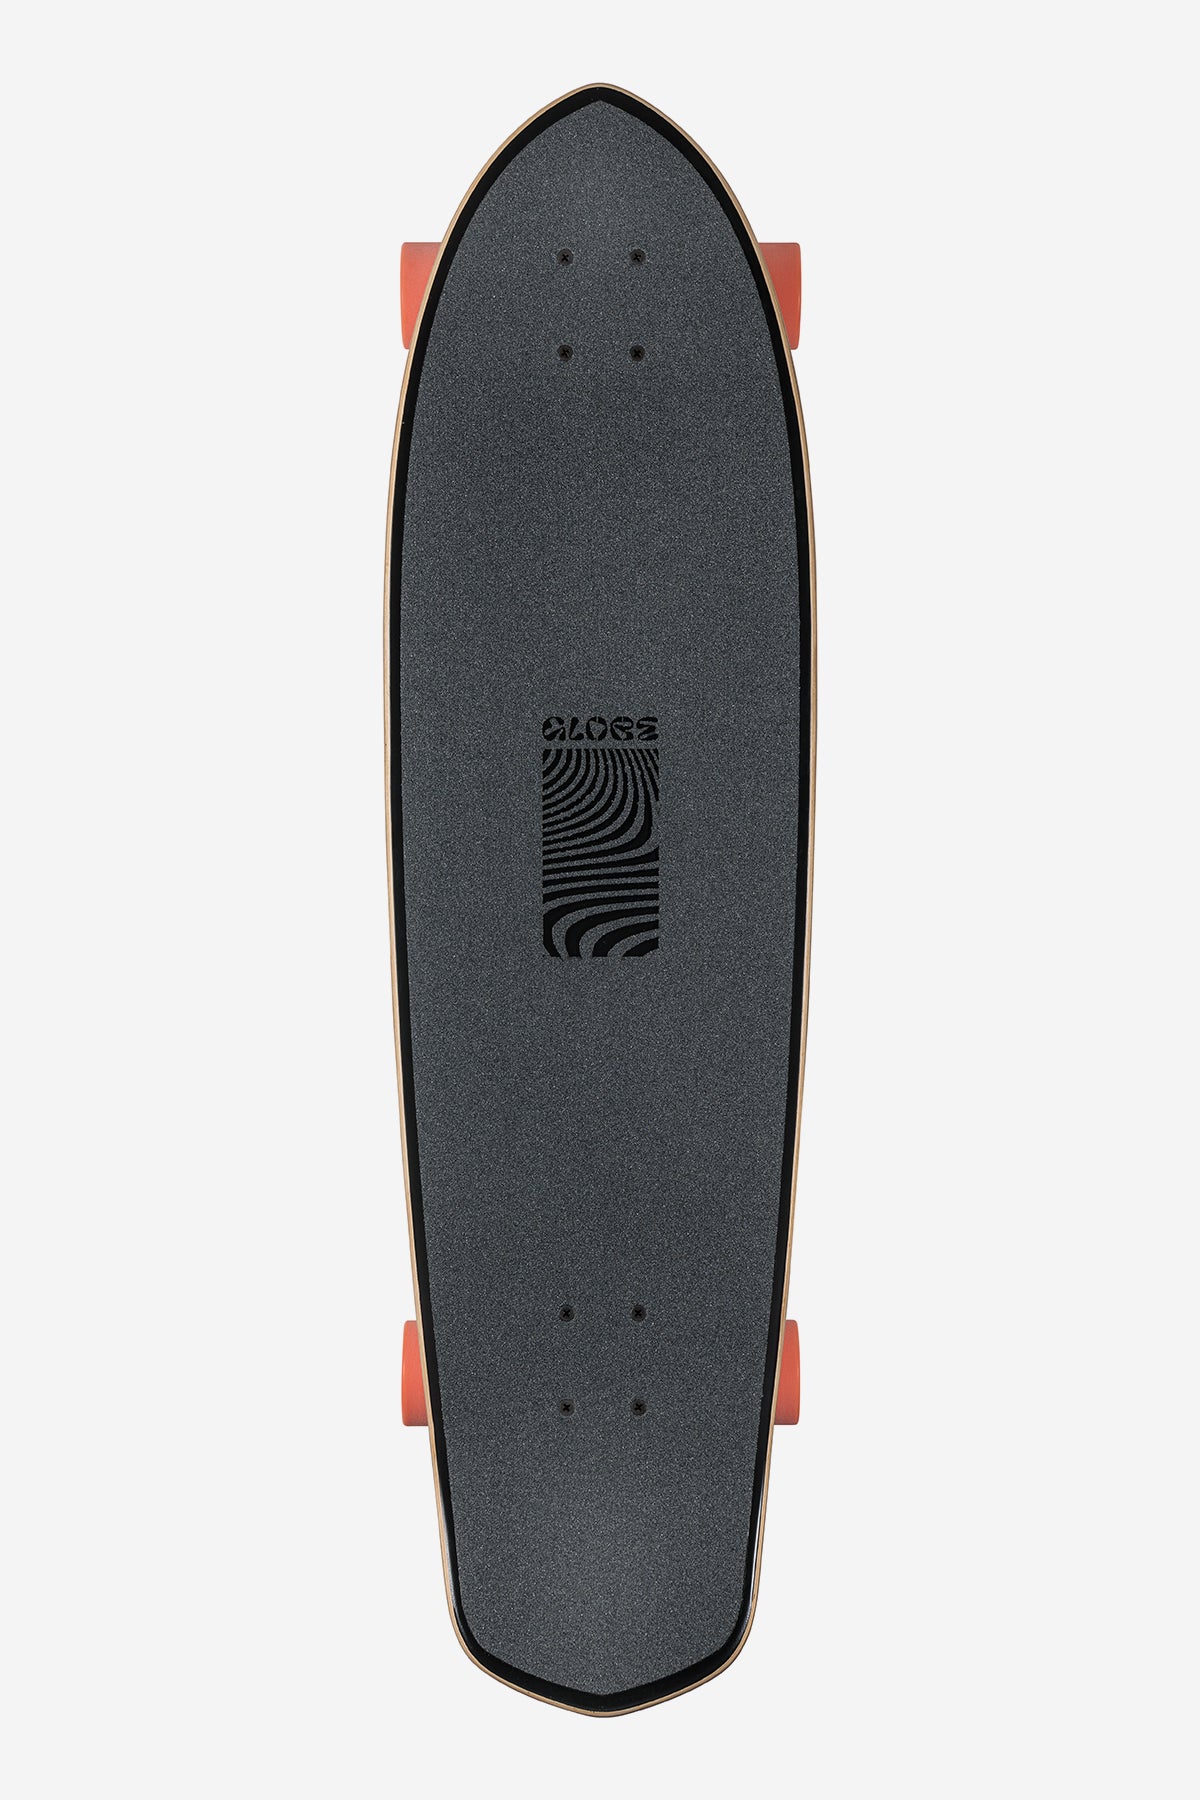 Blazer XL 36" Longboard - Black/Orange